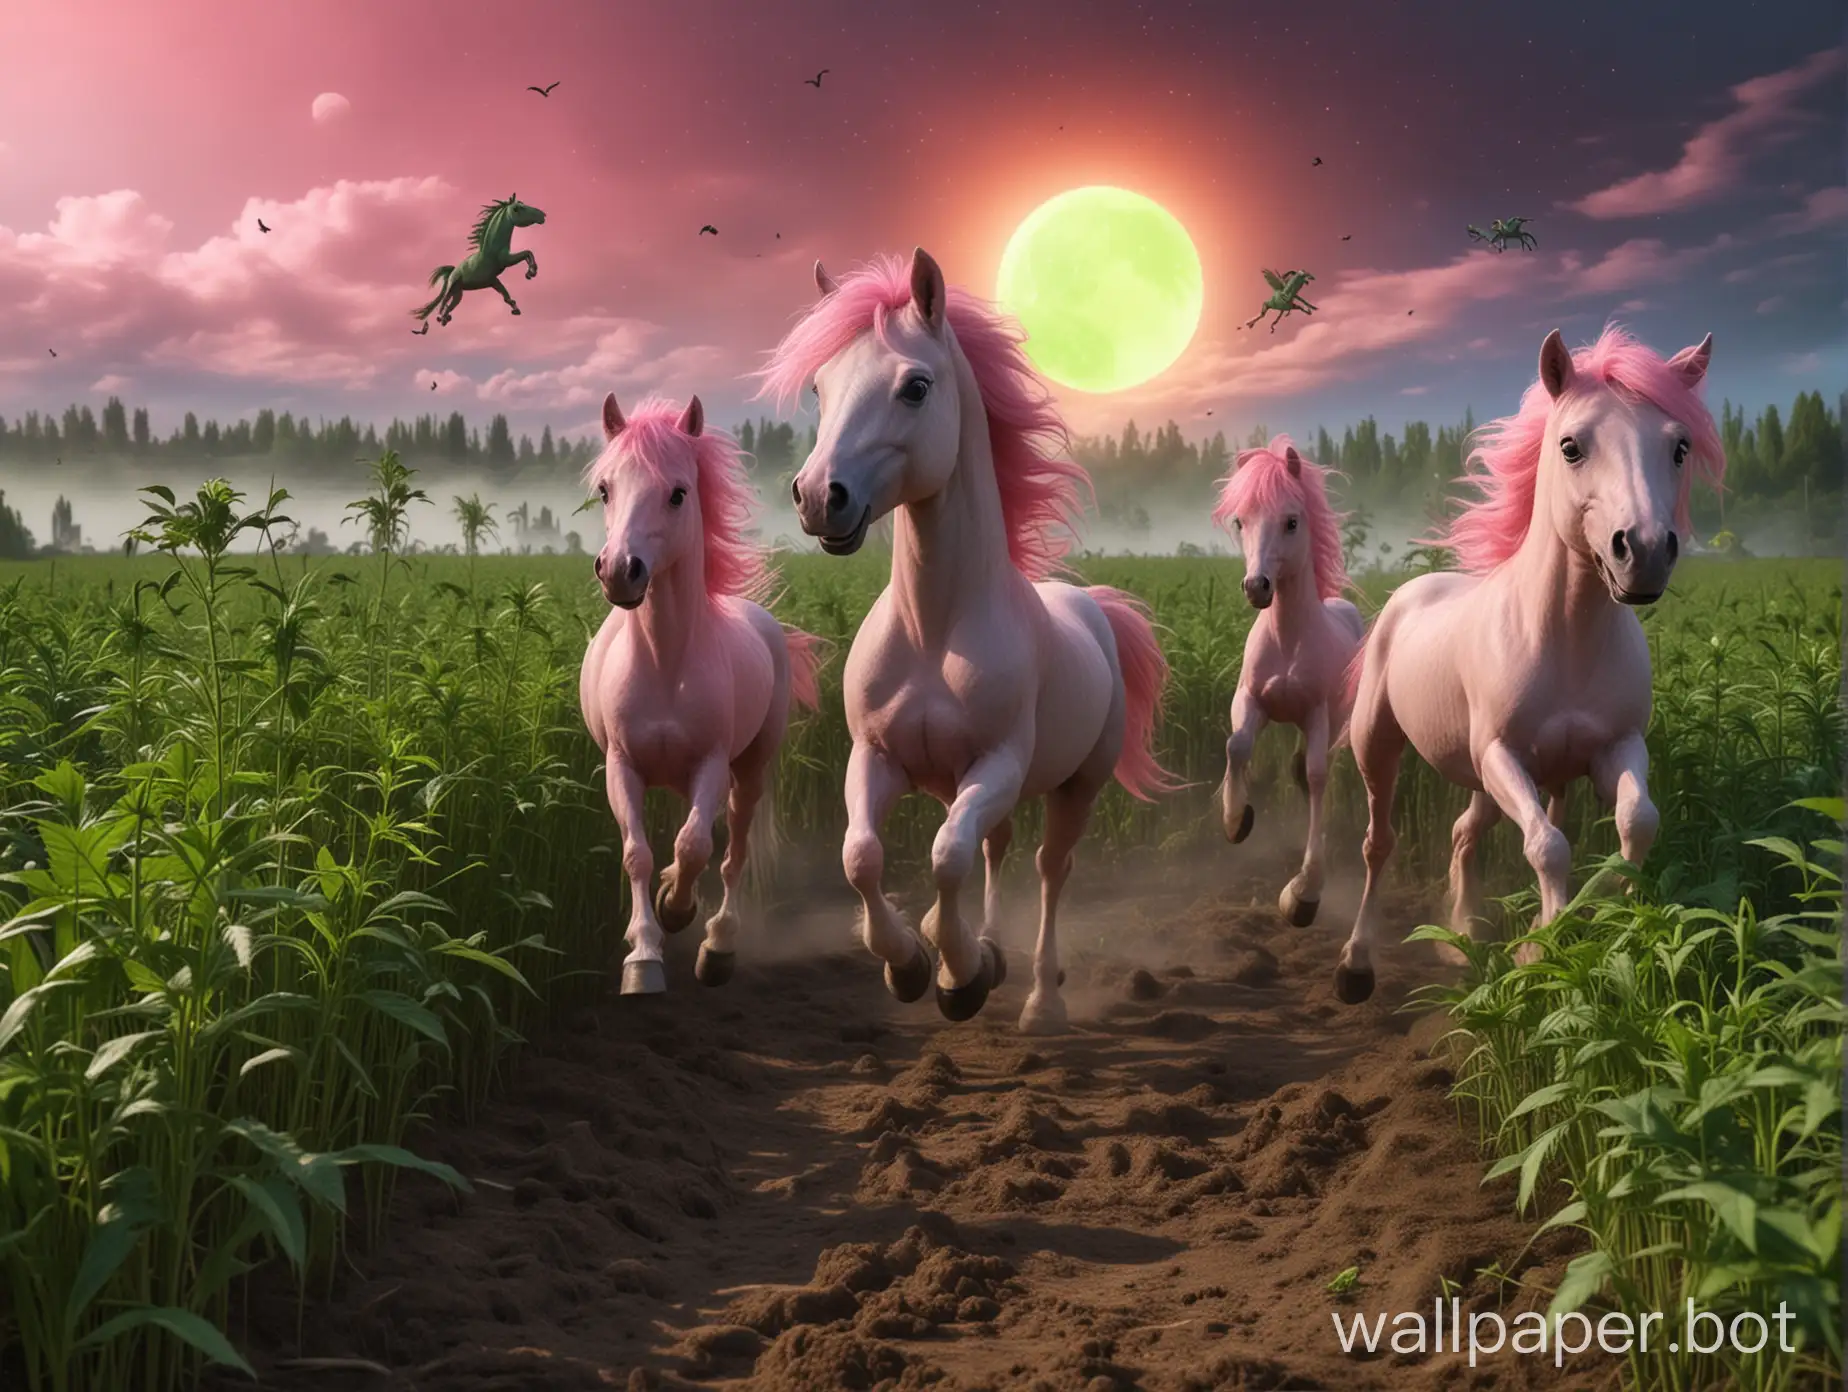 Alien-Encounter-Green-Moonlit-Hemp-Field-with-Rainbow-and-Pink-Ponies